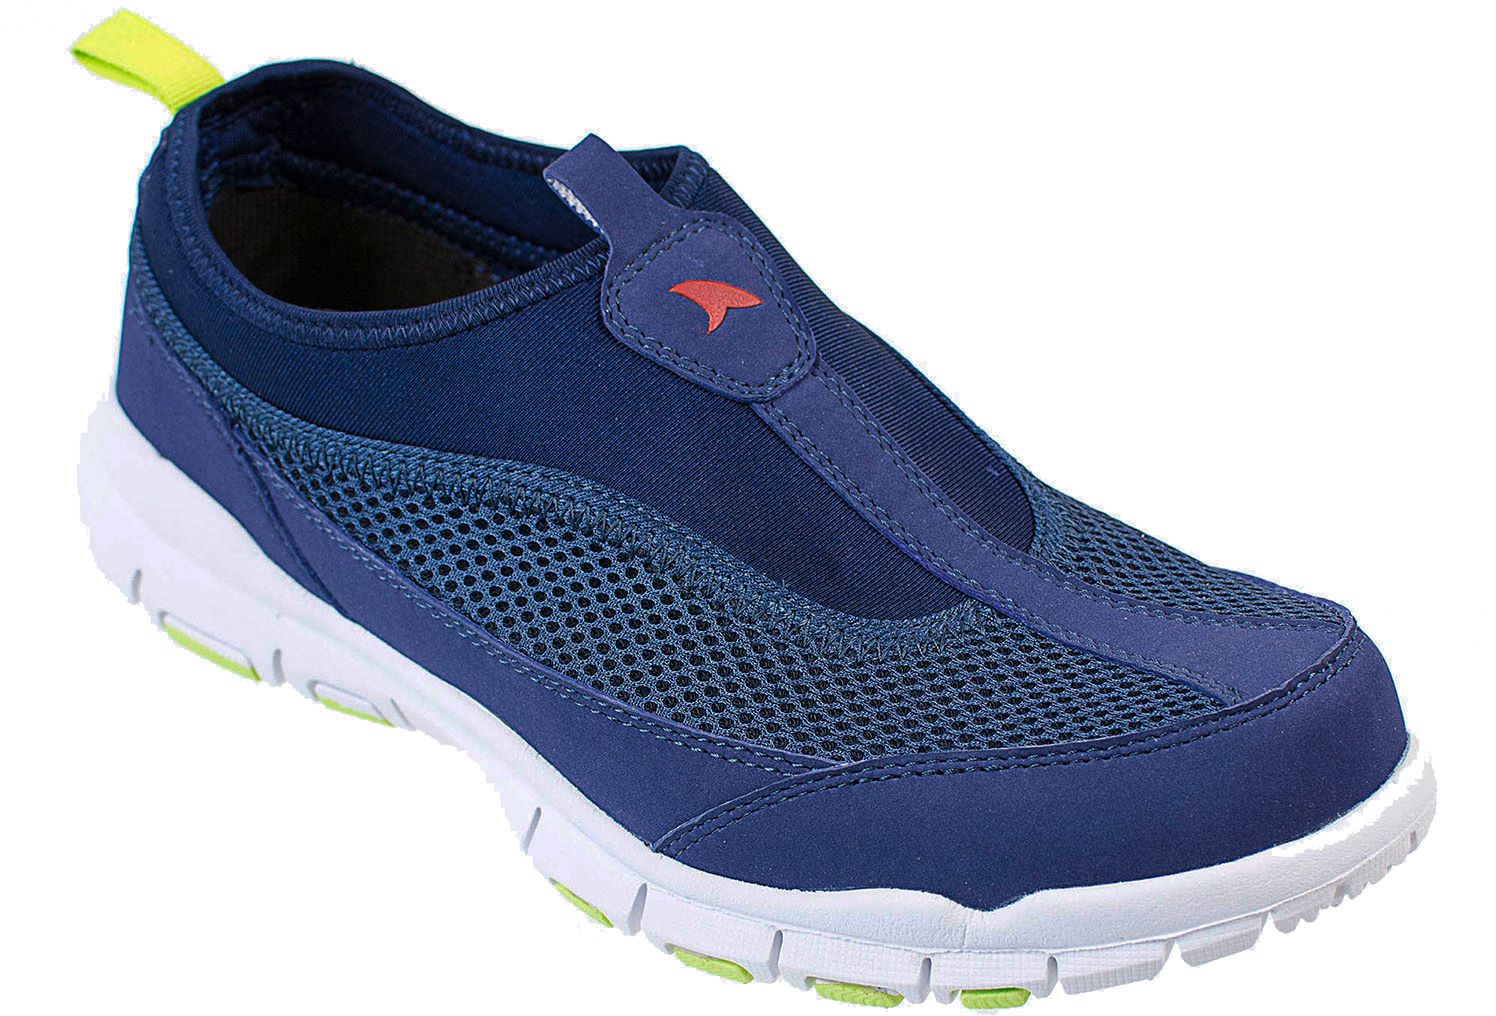 Men's Water Shoes | DICK'S Sporting Goods